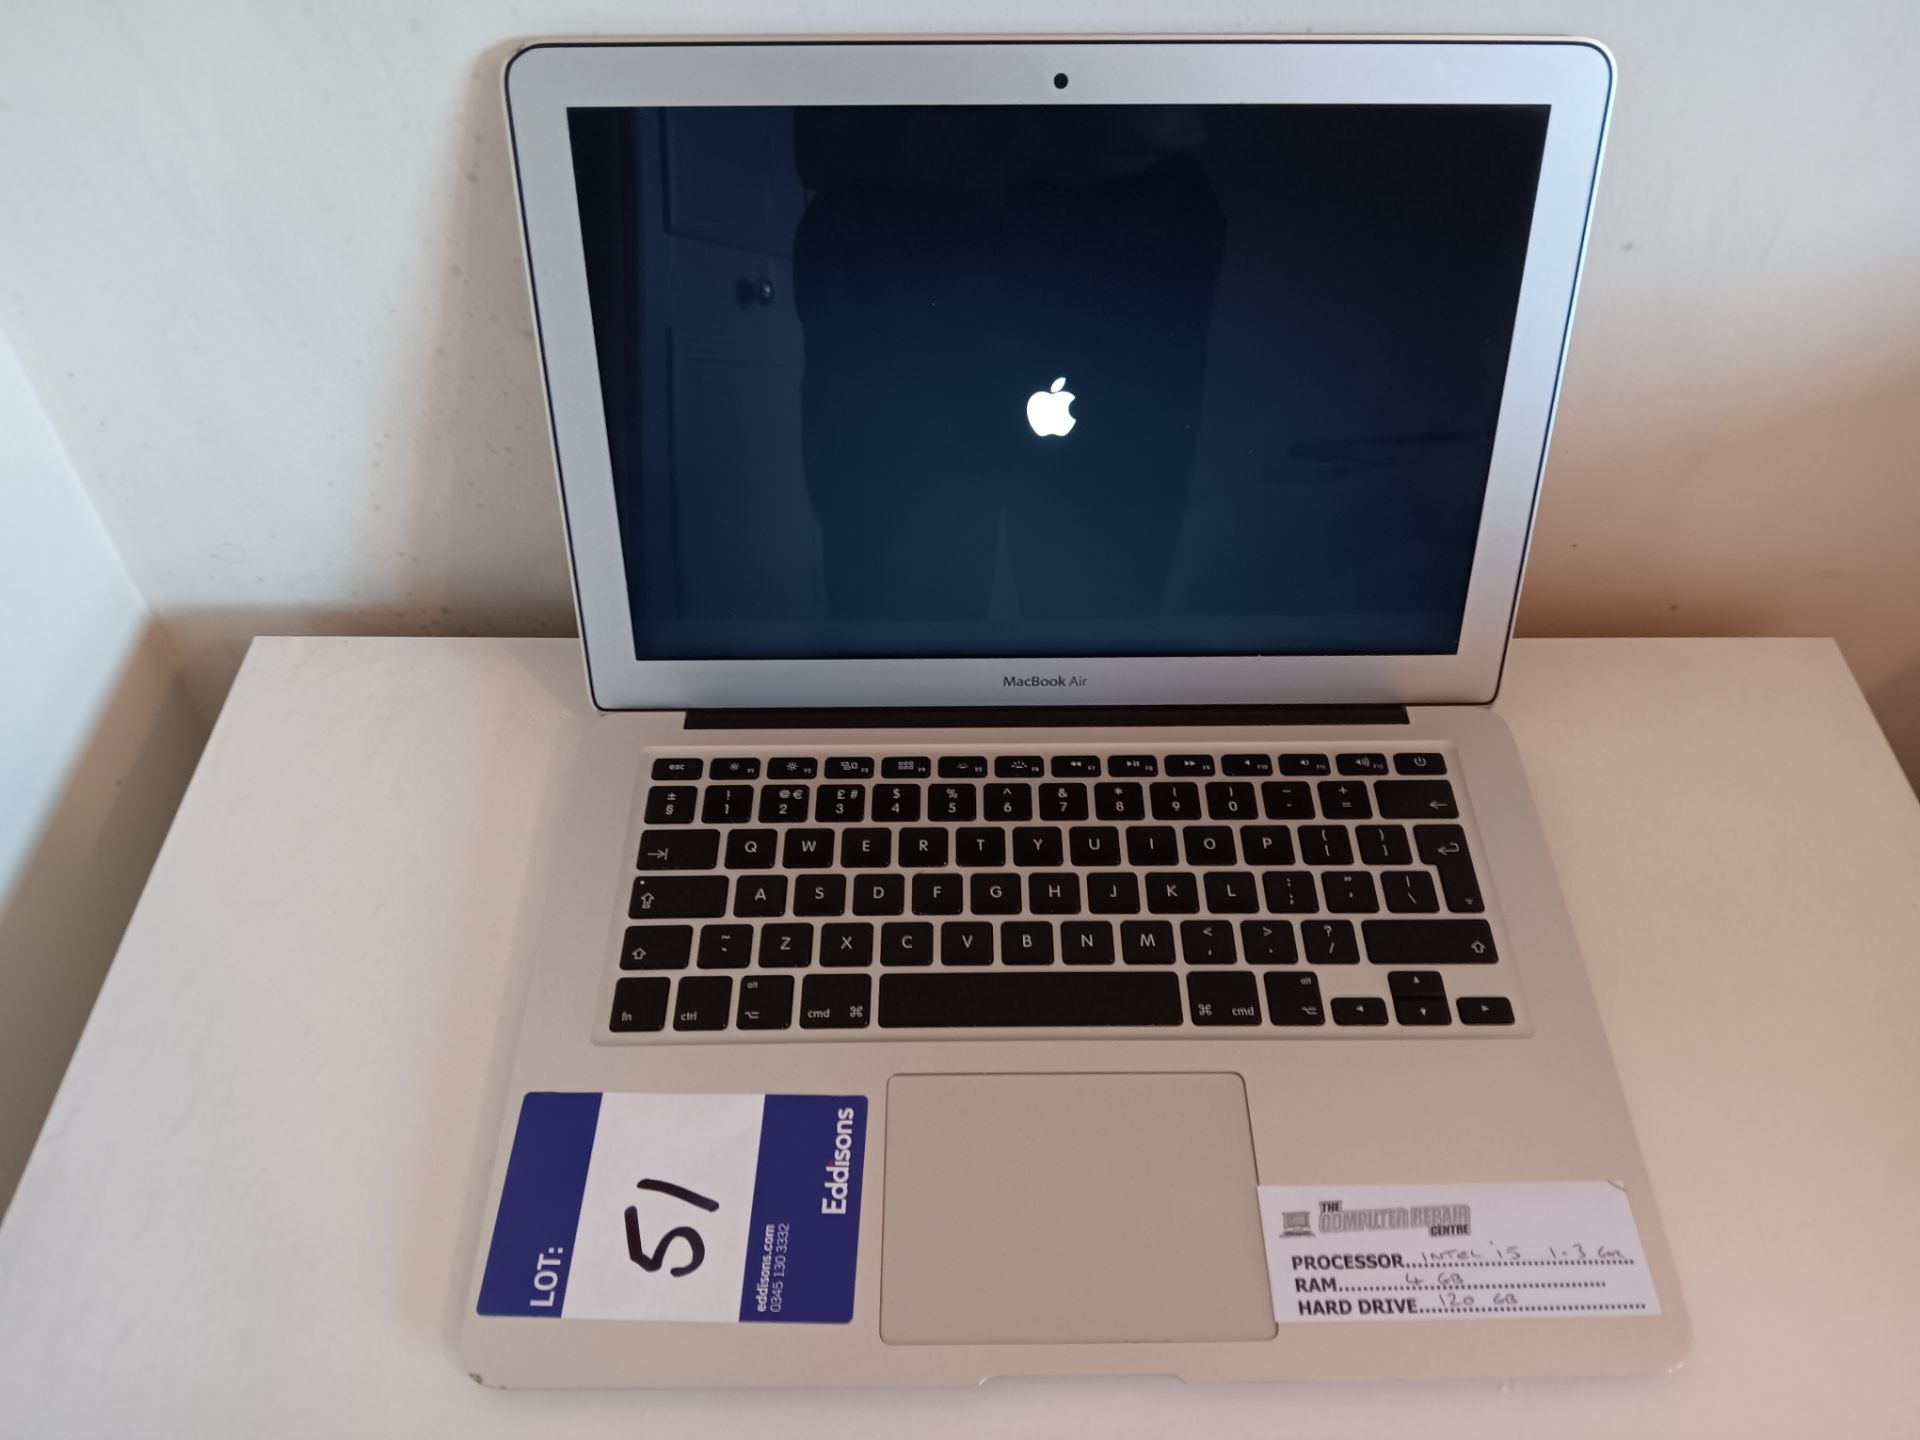 Apple MacBook Air i5 – 1.3GHZ Processor, 4GB Ram & 120GB Hard Drive (Needs Bios Battery & No